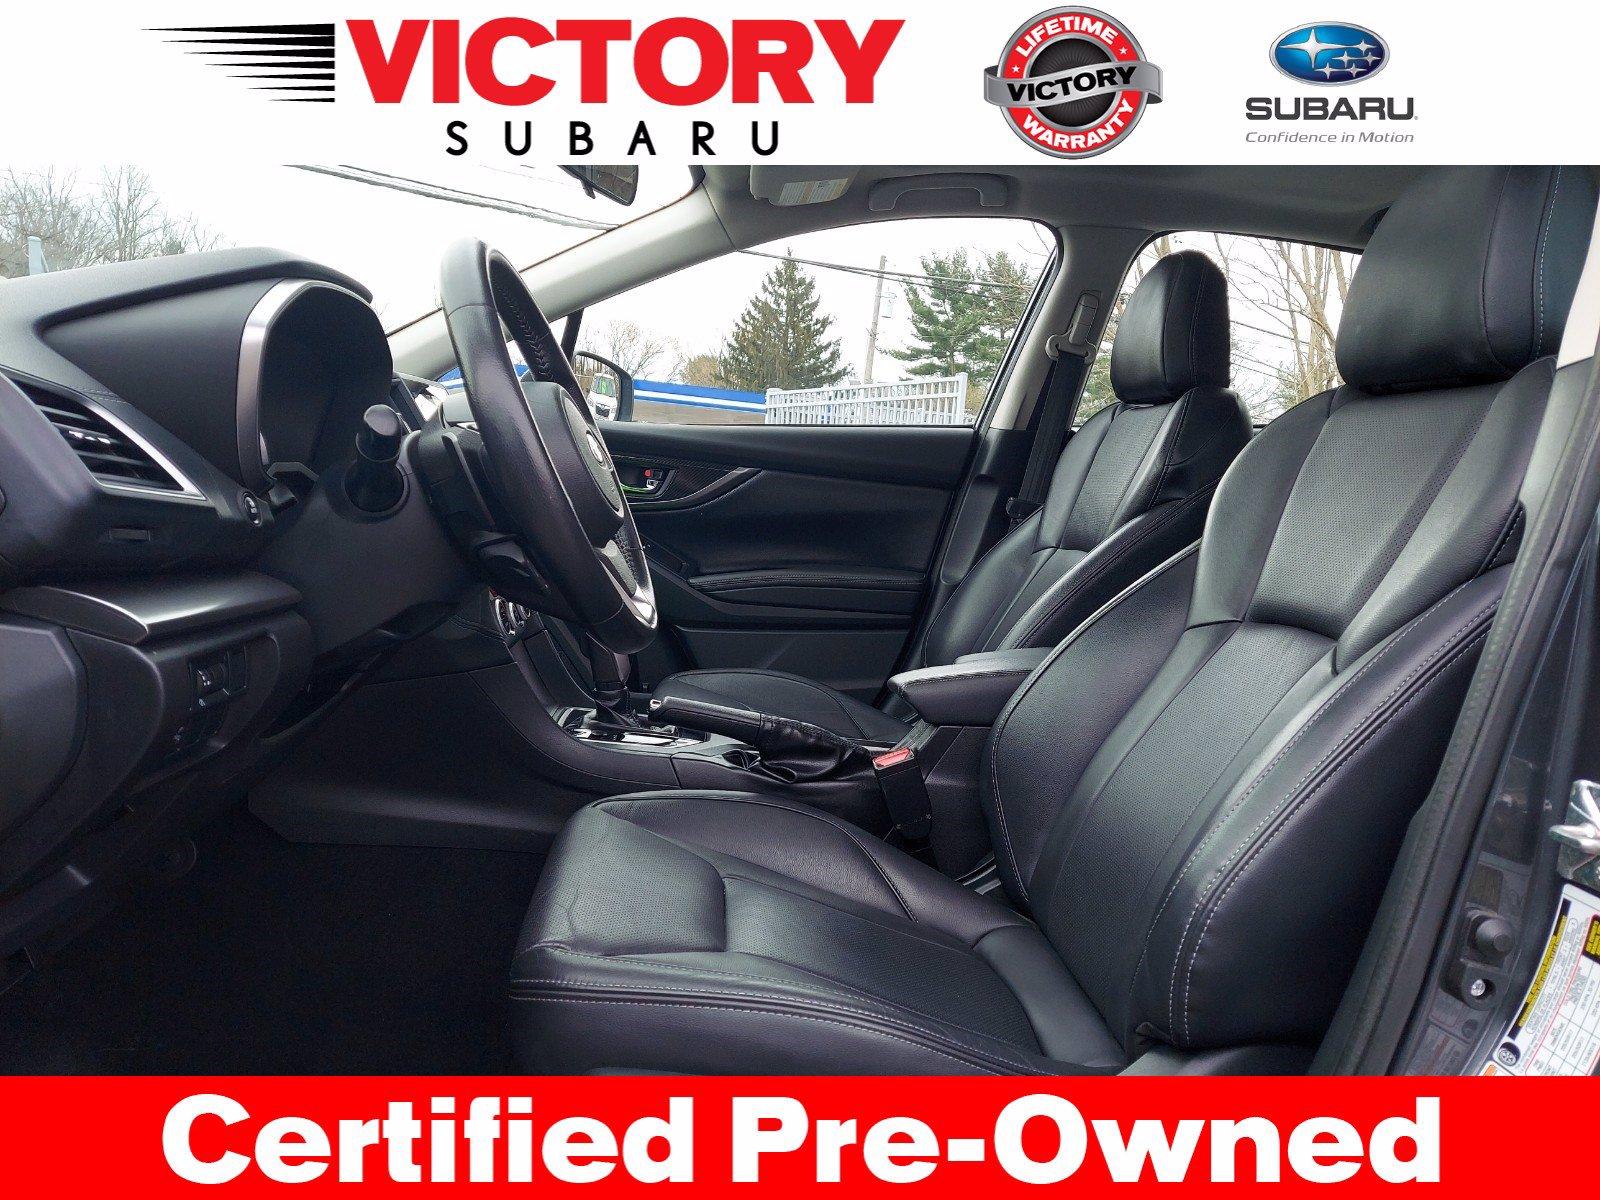 Used 2019 Subaru Impreza Limited for sale $23,999 at Victory Lotus in New Brunswick, NJ 08901 1